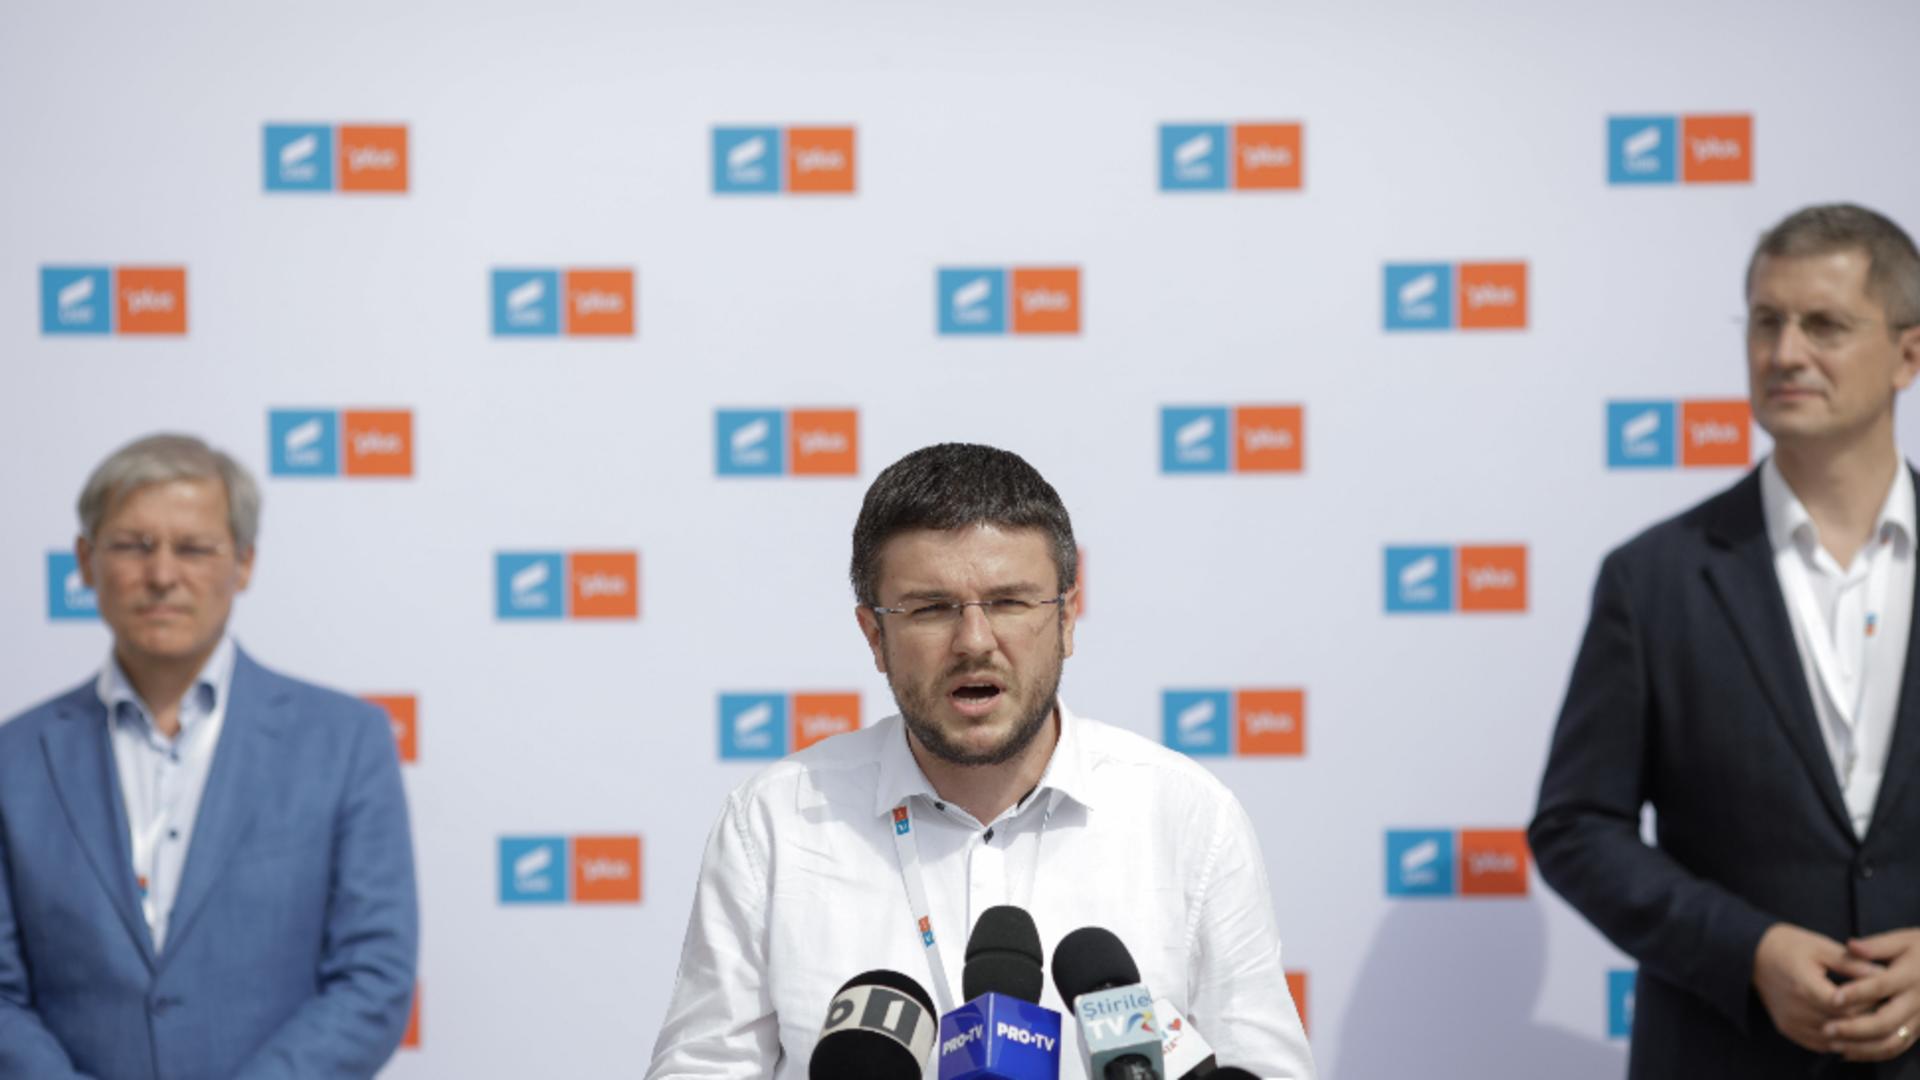 Candidații la șefia USR Plus:  Dacian Cioloș, Irineu Darău, Dan Barba (Inquam/G. Călin)